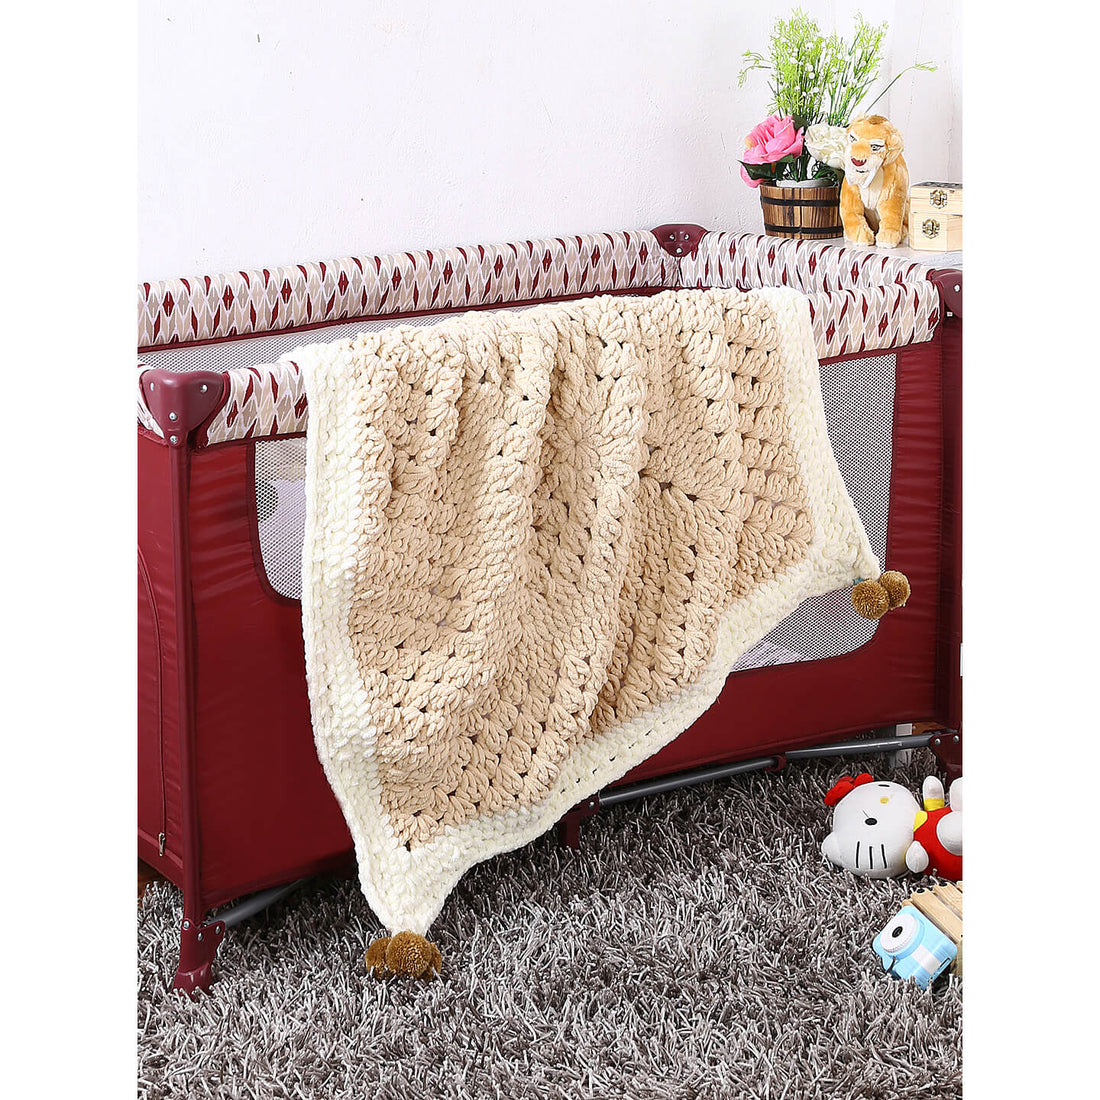 Soft Chenille Granny Square Baby Blanket - Beige, Cream 2735